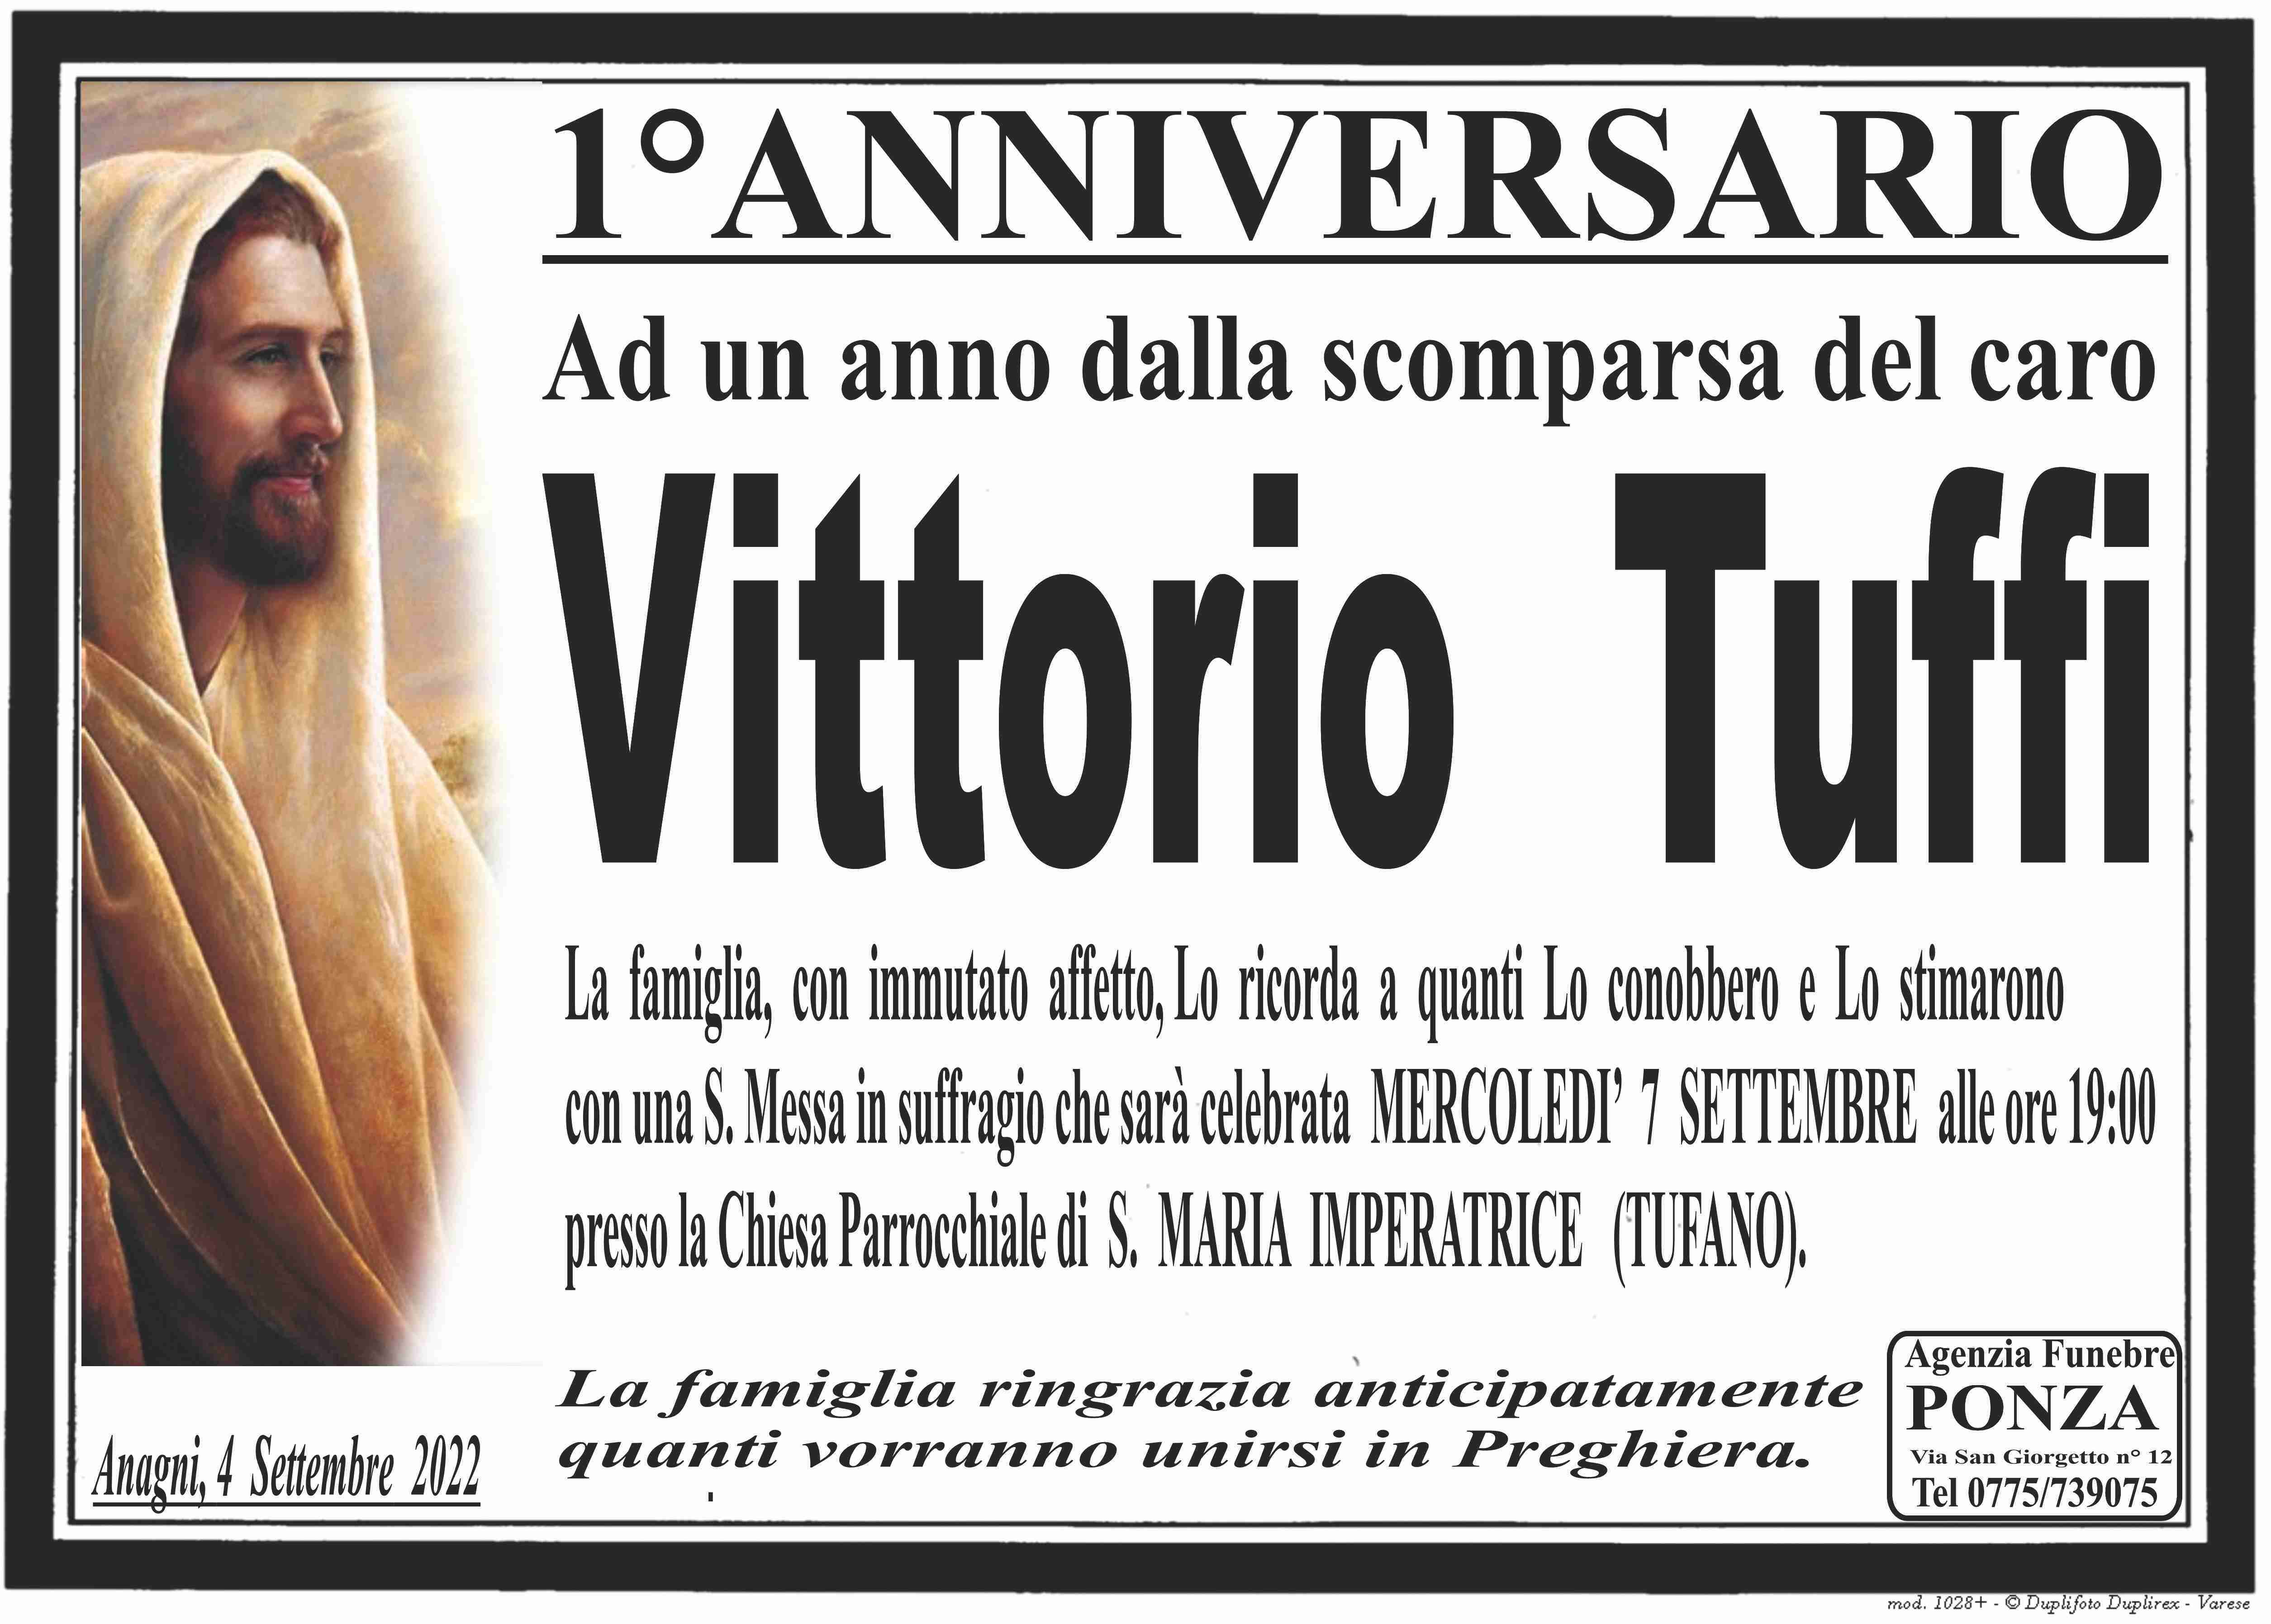 Vittorio Tuffi